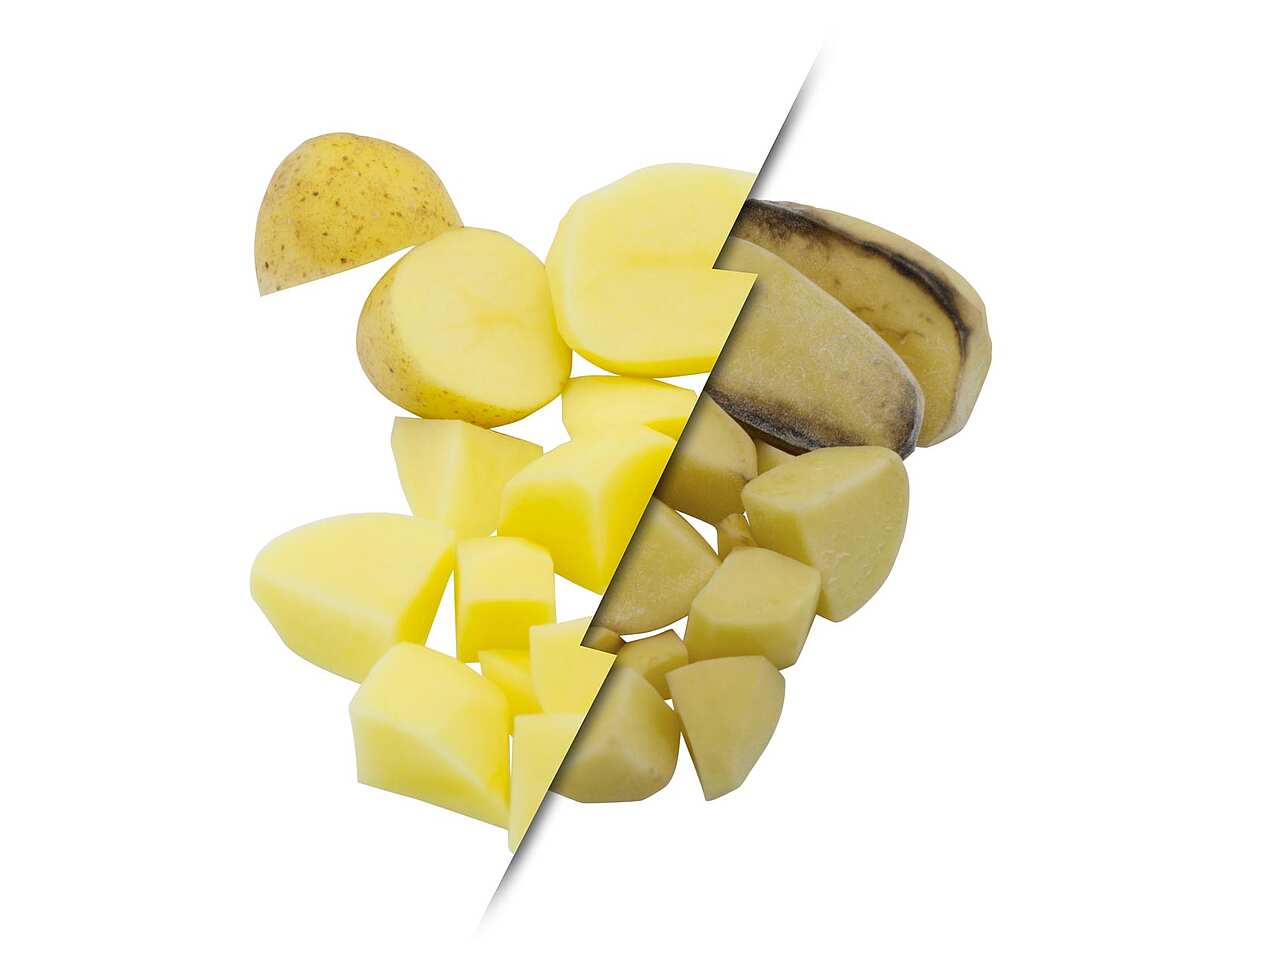 Fresh-Cut Potatoes treated with Food freshly vs. untreated